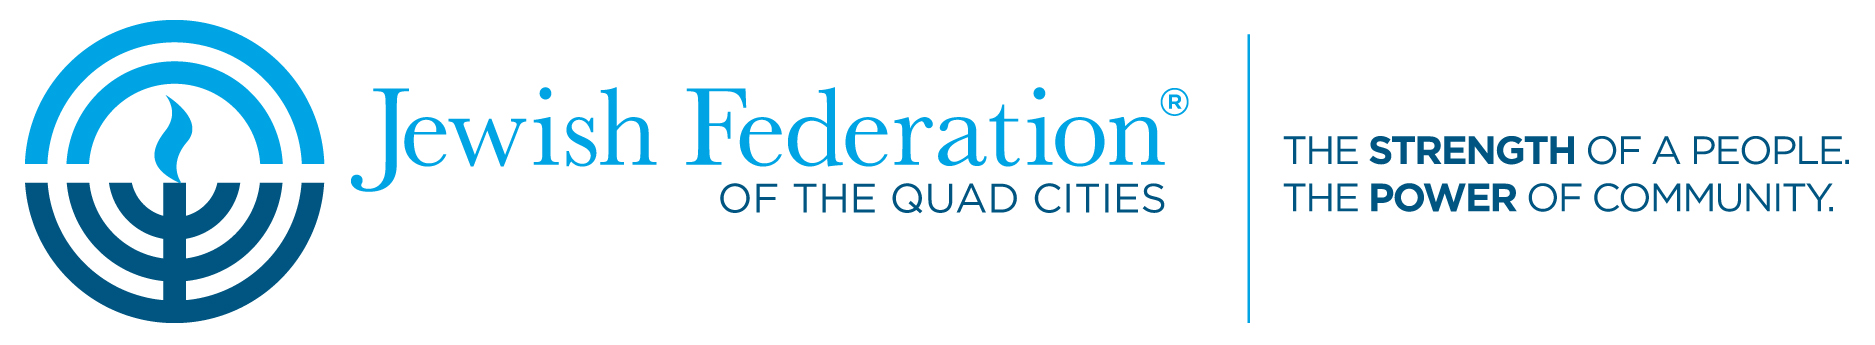 Jewish Federation of the Quad Cities - logo